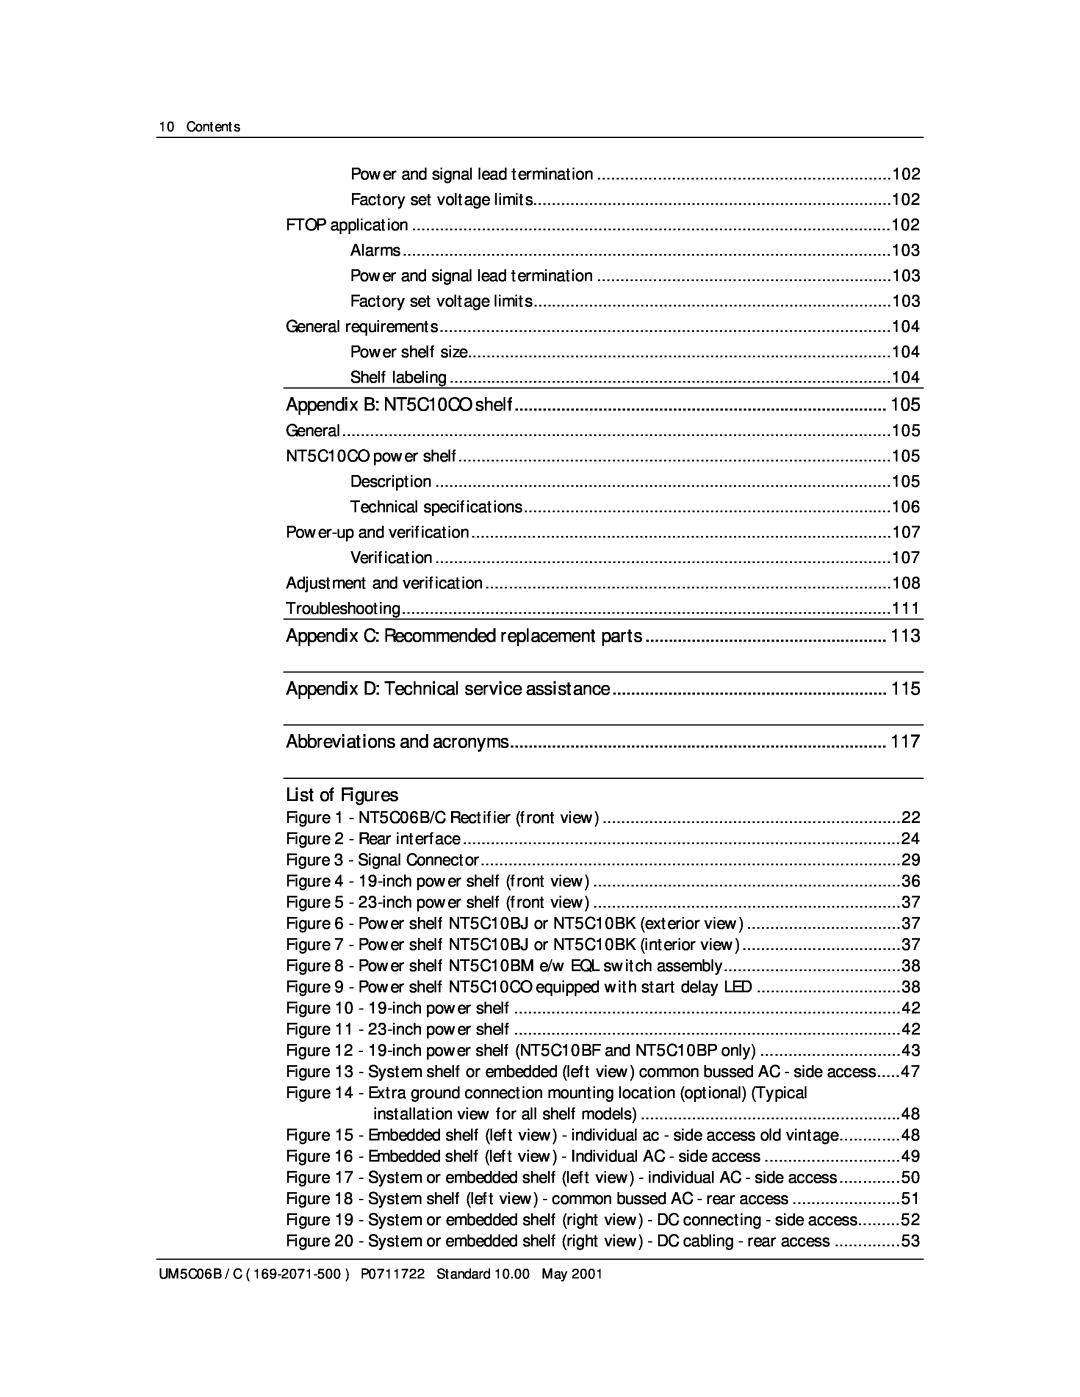 Emerson MPR15 Series, MPR25 user manual List of Figures, Appendix B NT5C10CO shelf, Appendix C Recommended replacement parts 